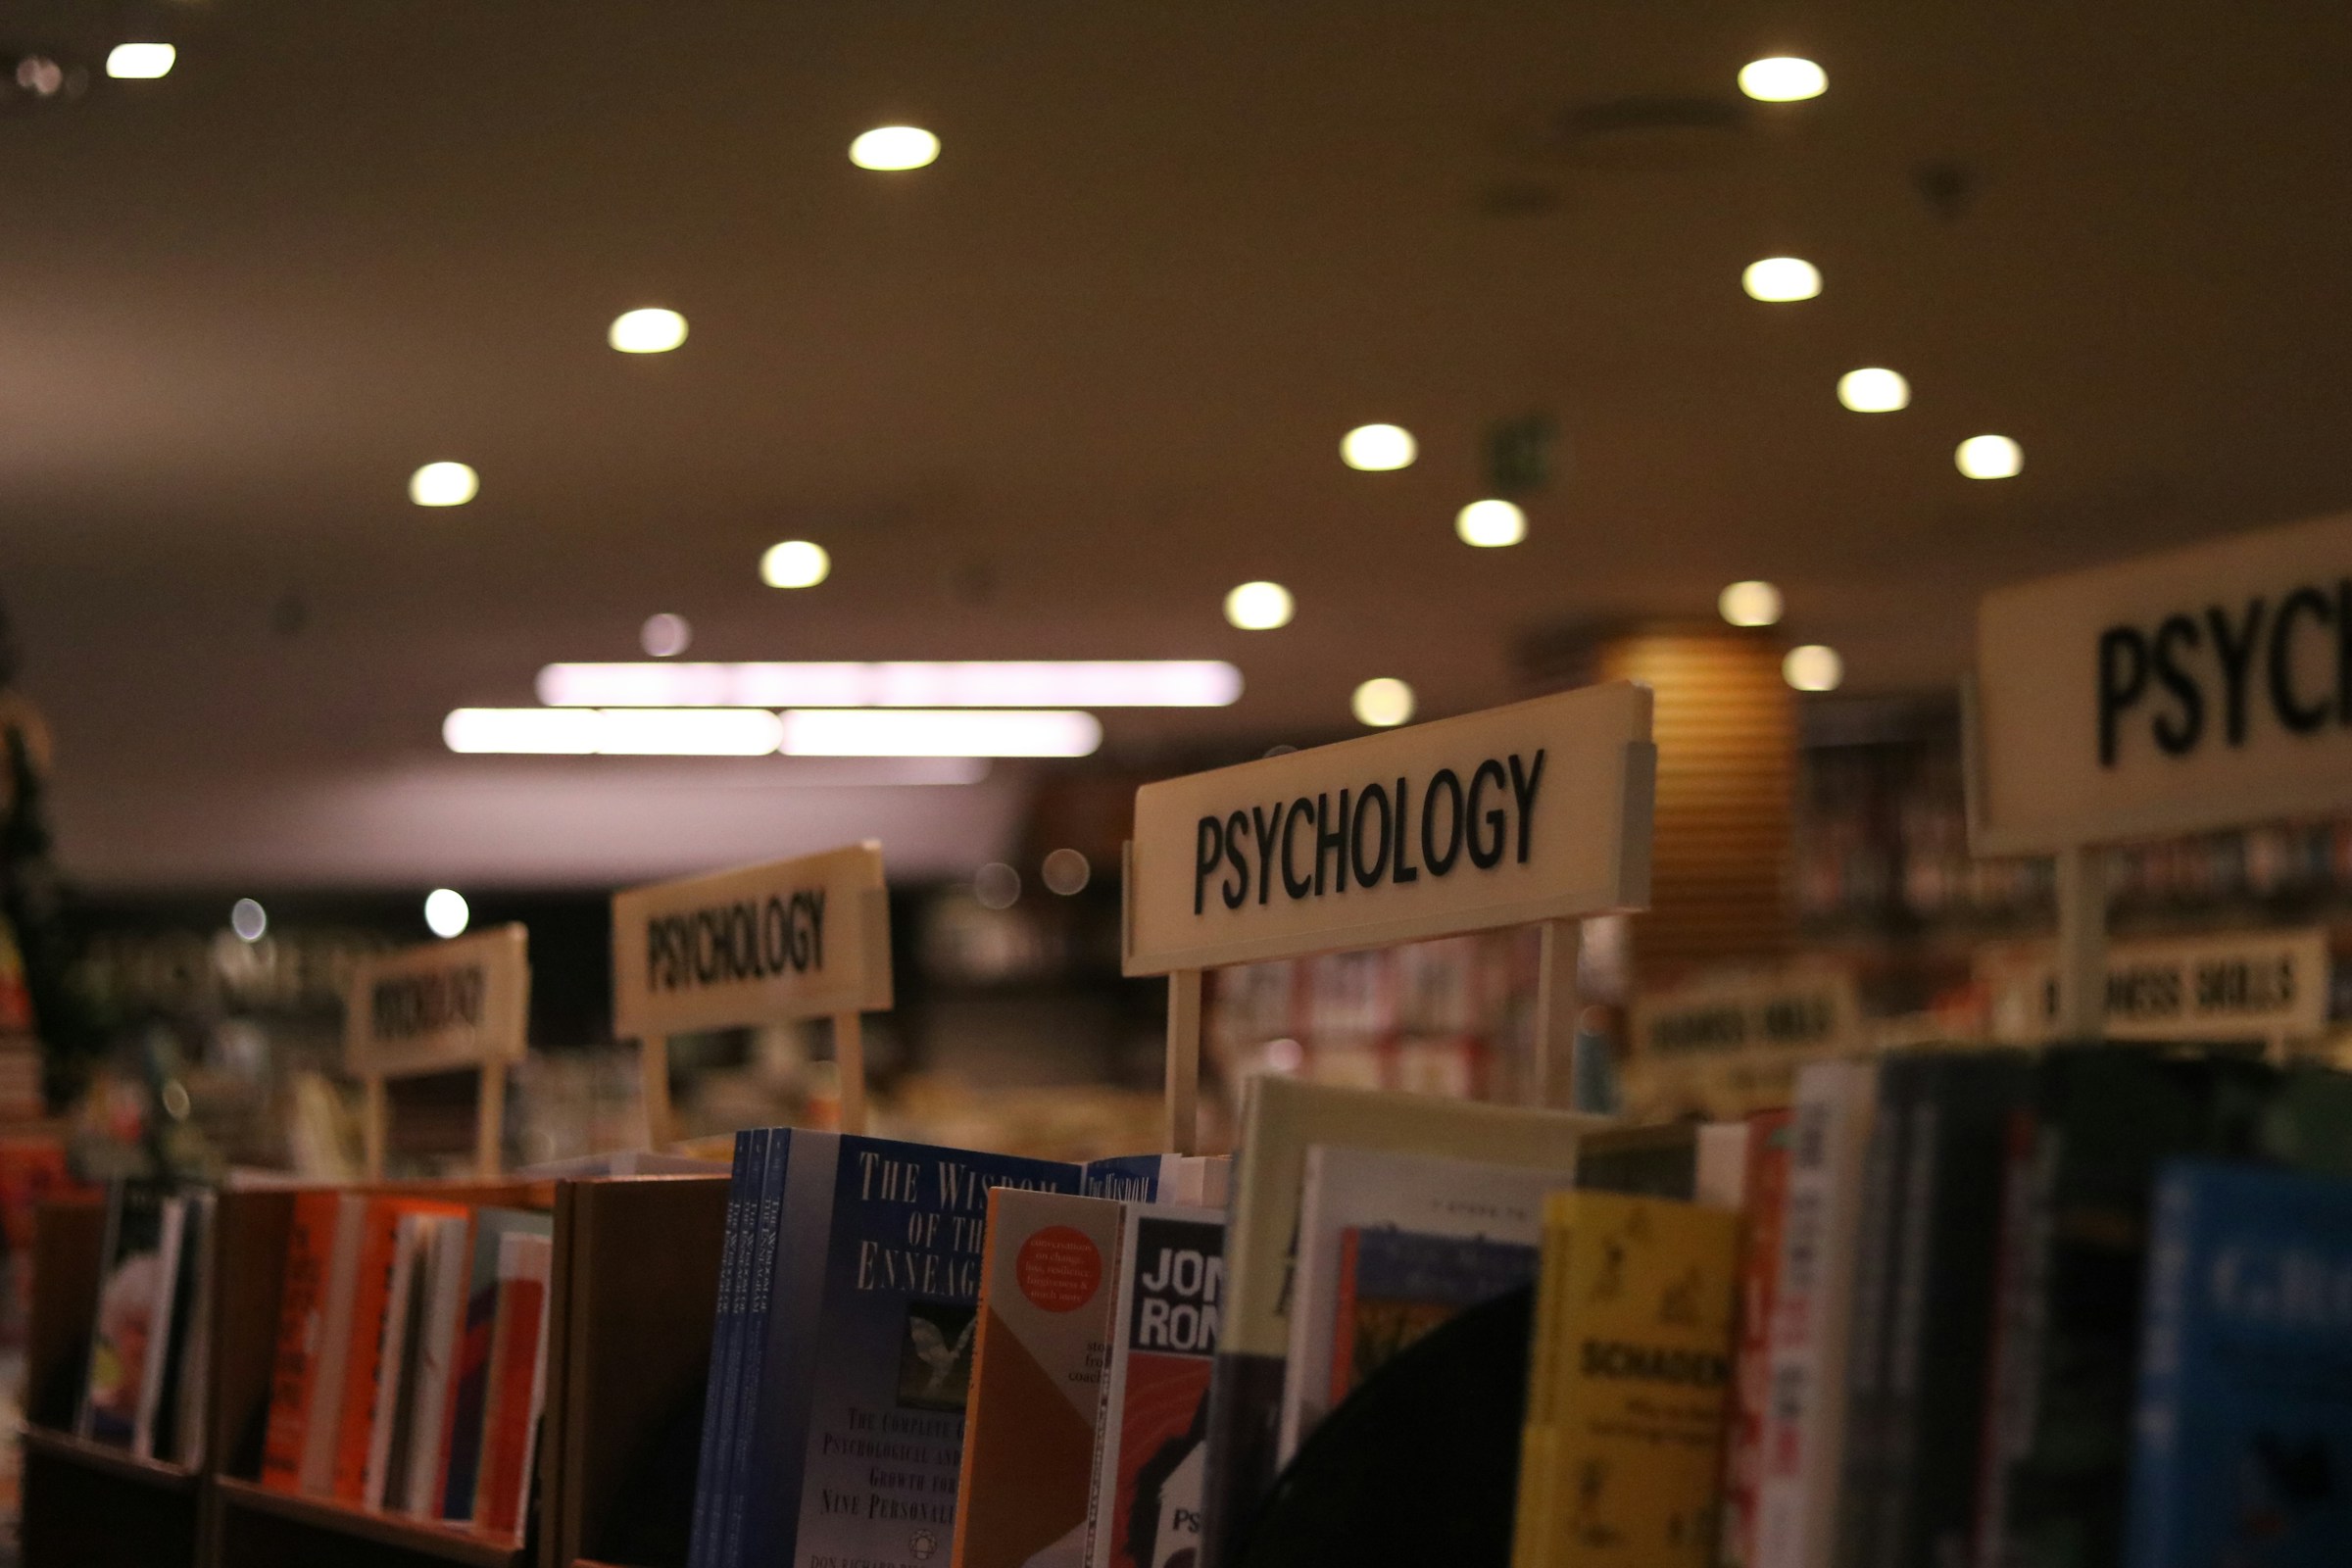 A row of psychology textbooks | Source: Unsplash